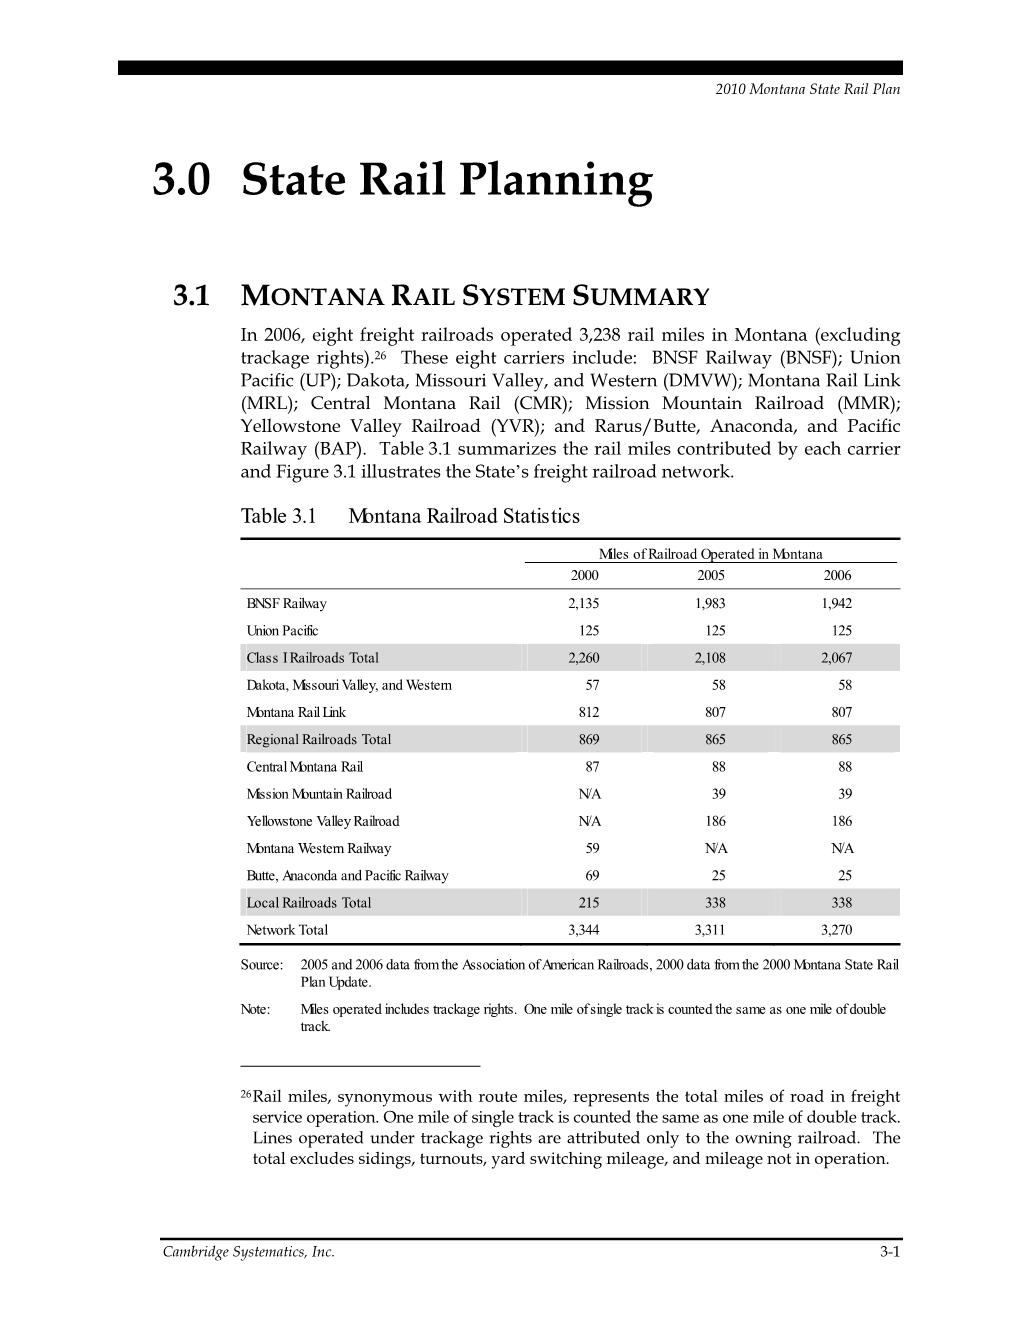 3.0 State Rail Planning